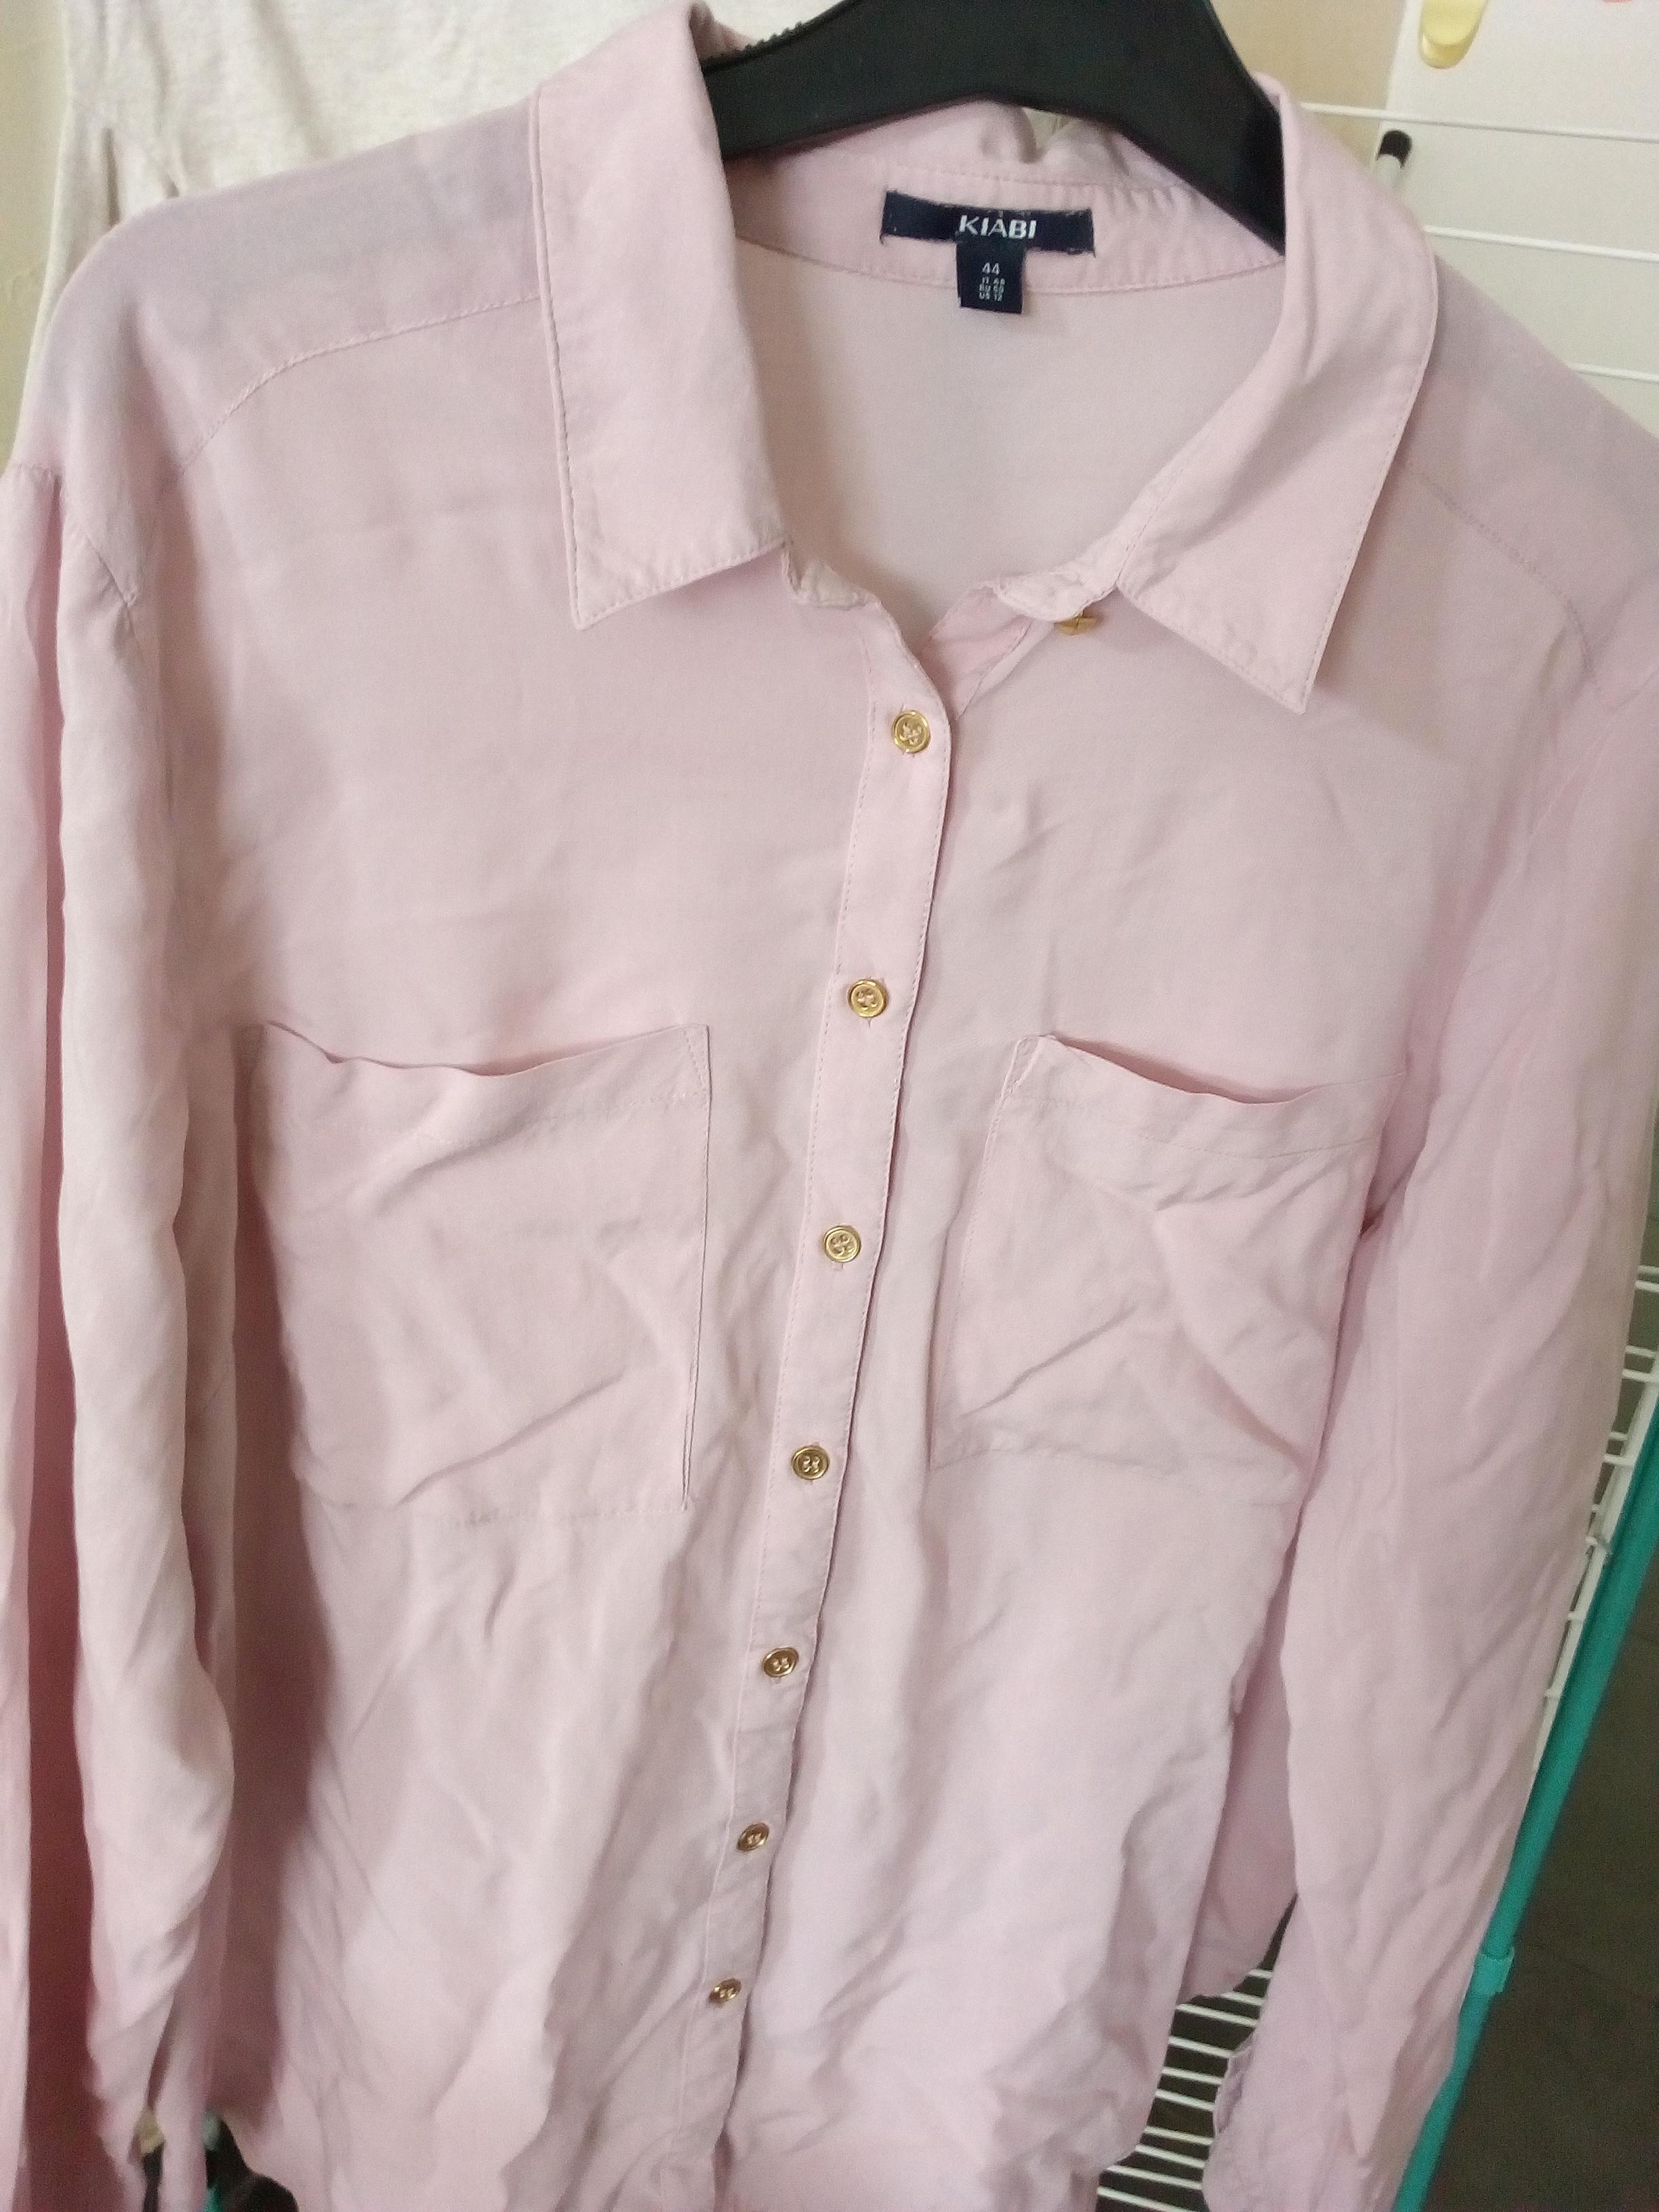 troc de troc chemise rose kiabi taille 44 image 0